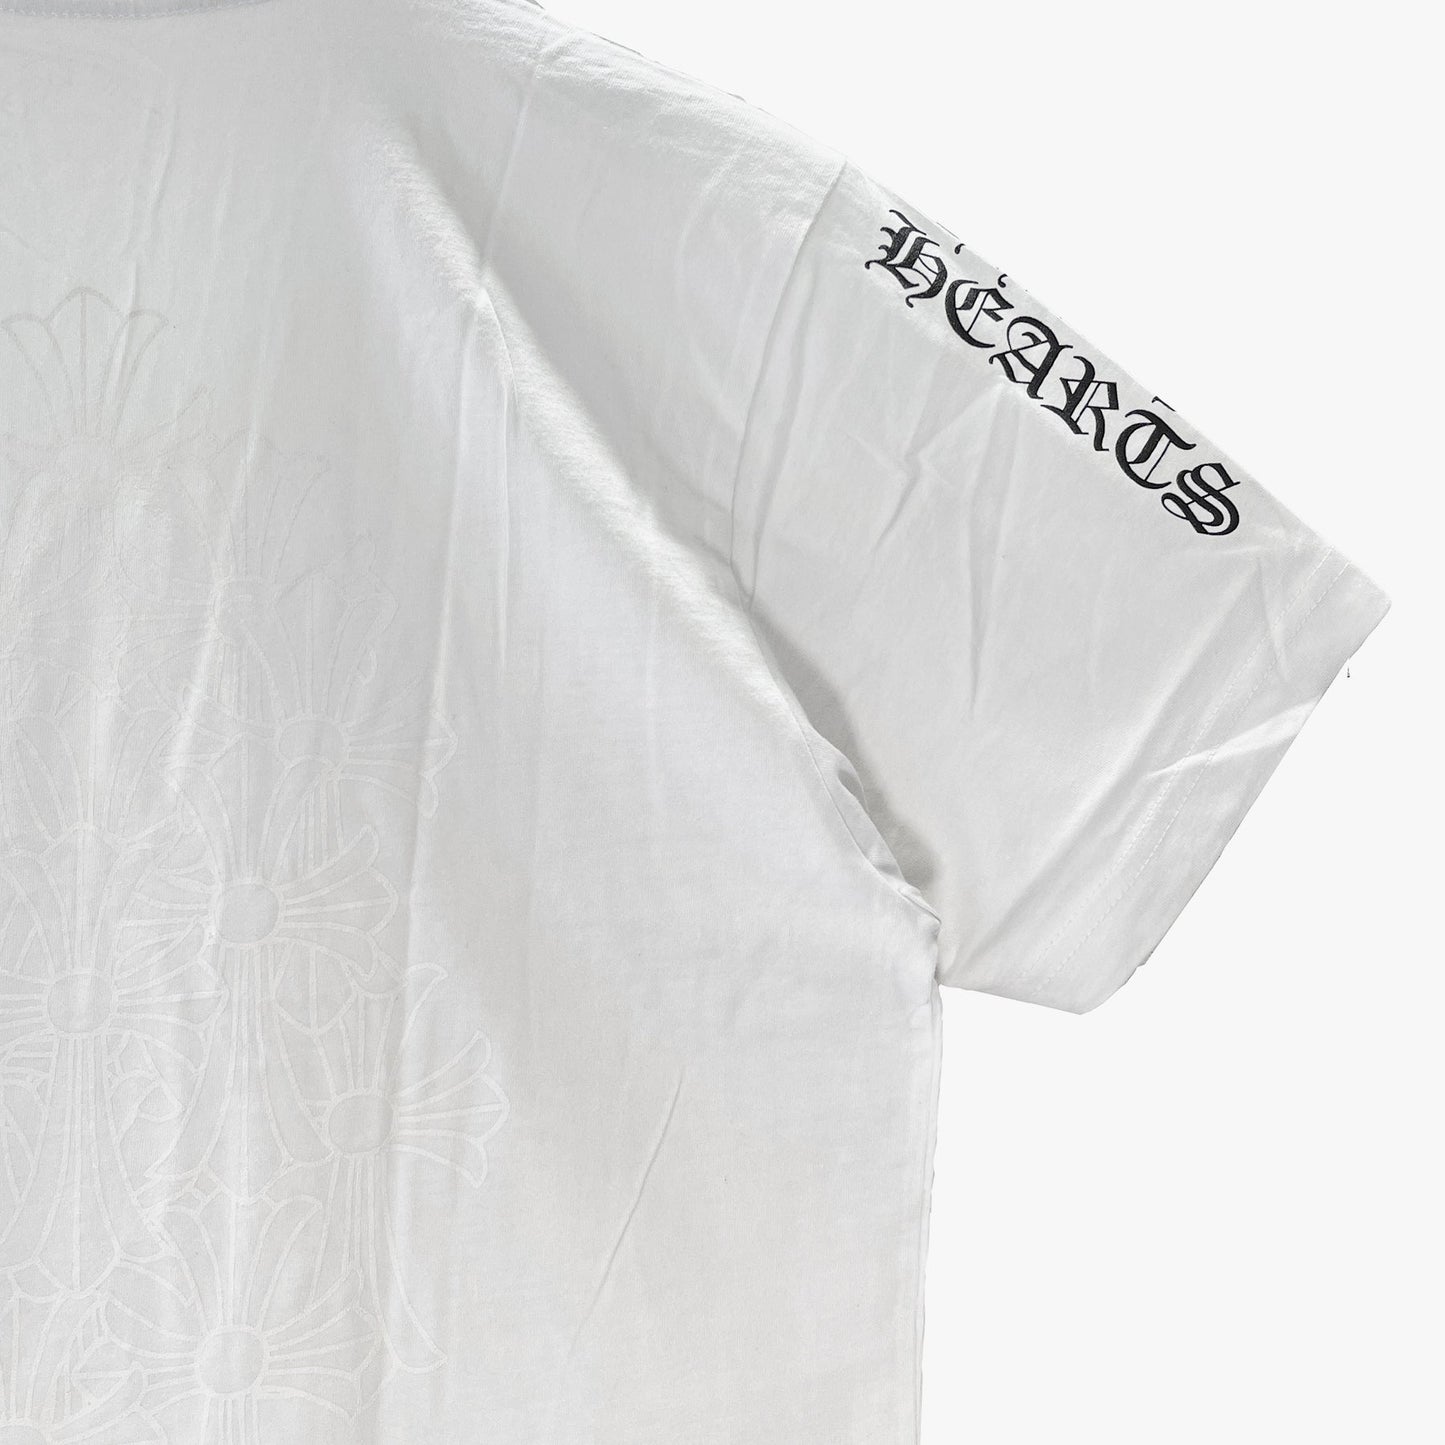 Chrome Hearts White Cross Logo Short Sleeve T-shirt - SHENGLI ROAD MARKET